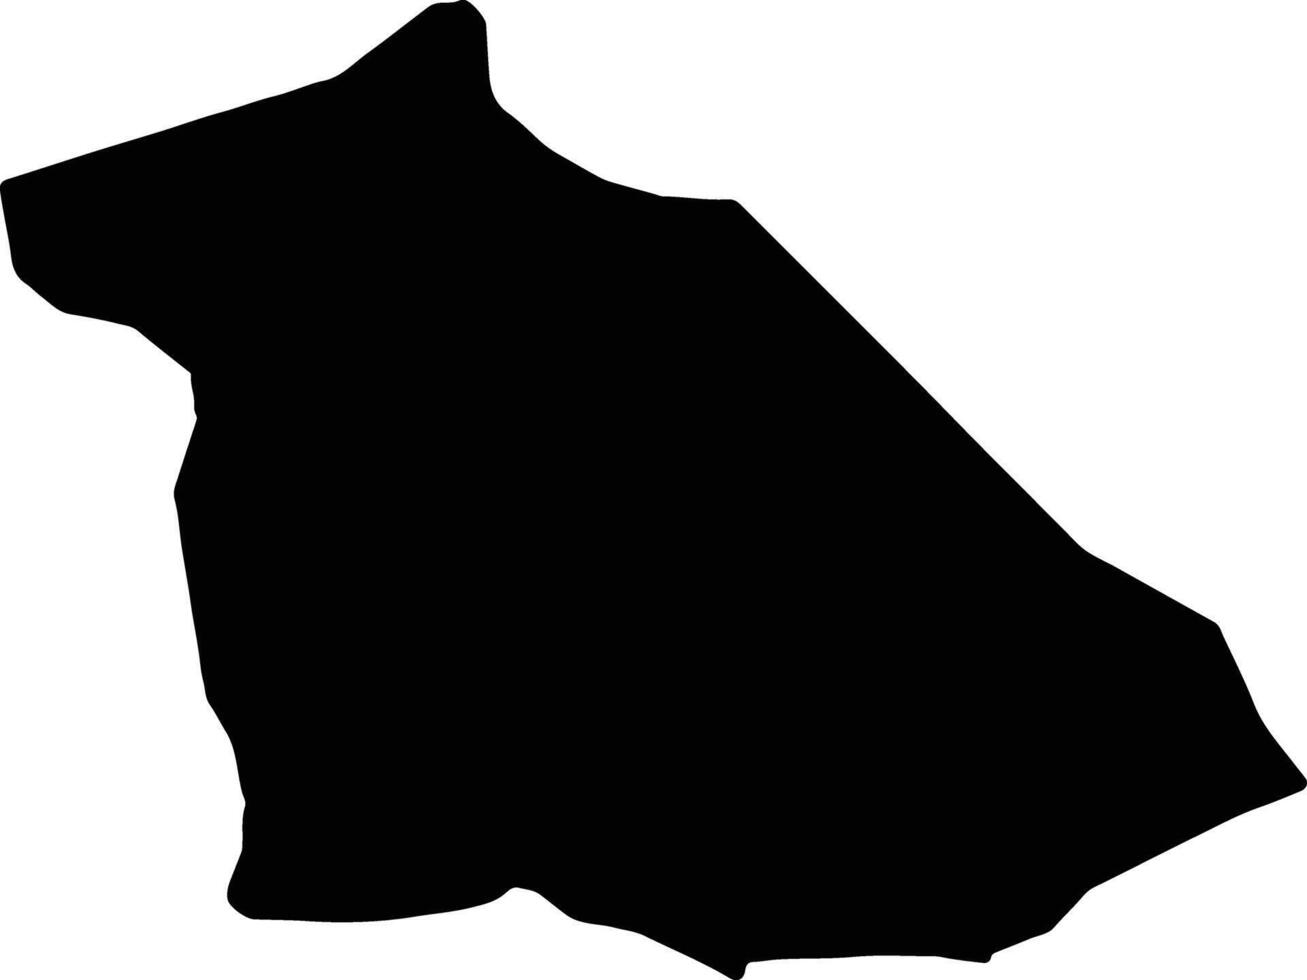 kriva palanka macedonia silhouette carta geografica vettore